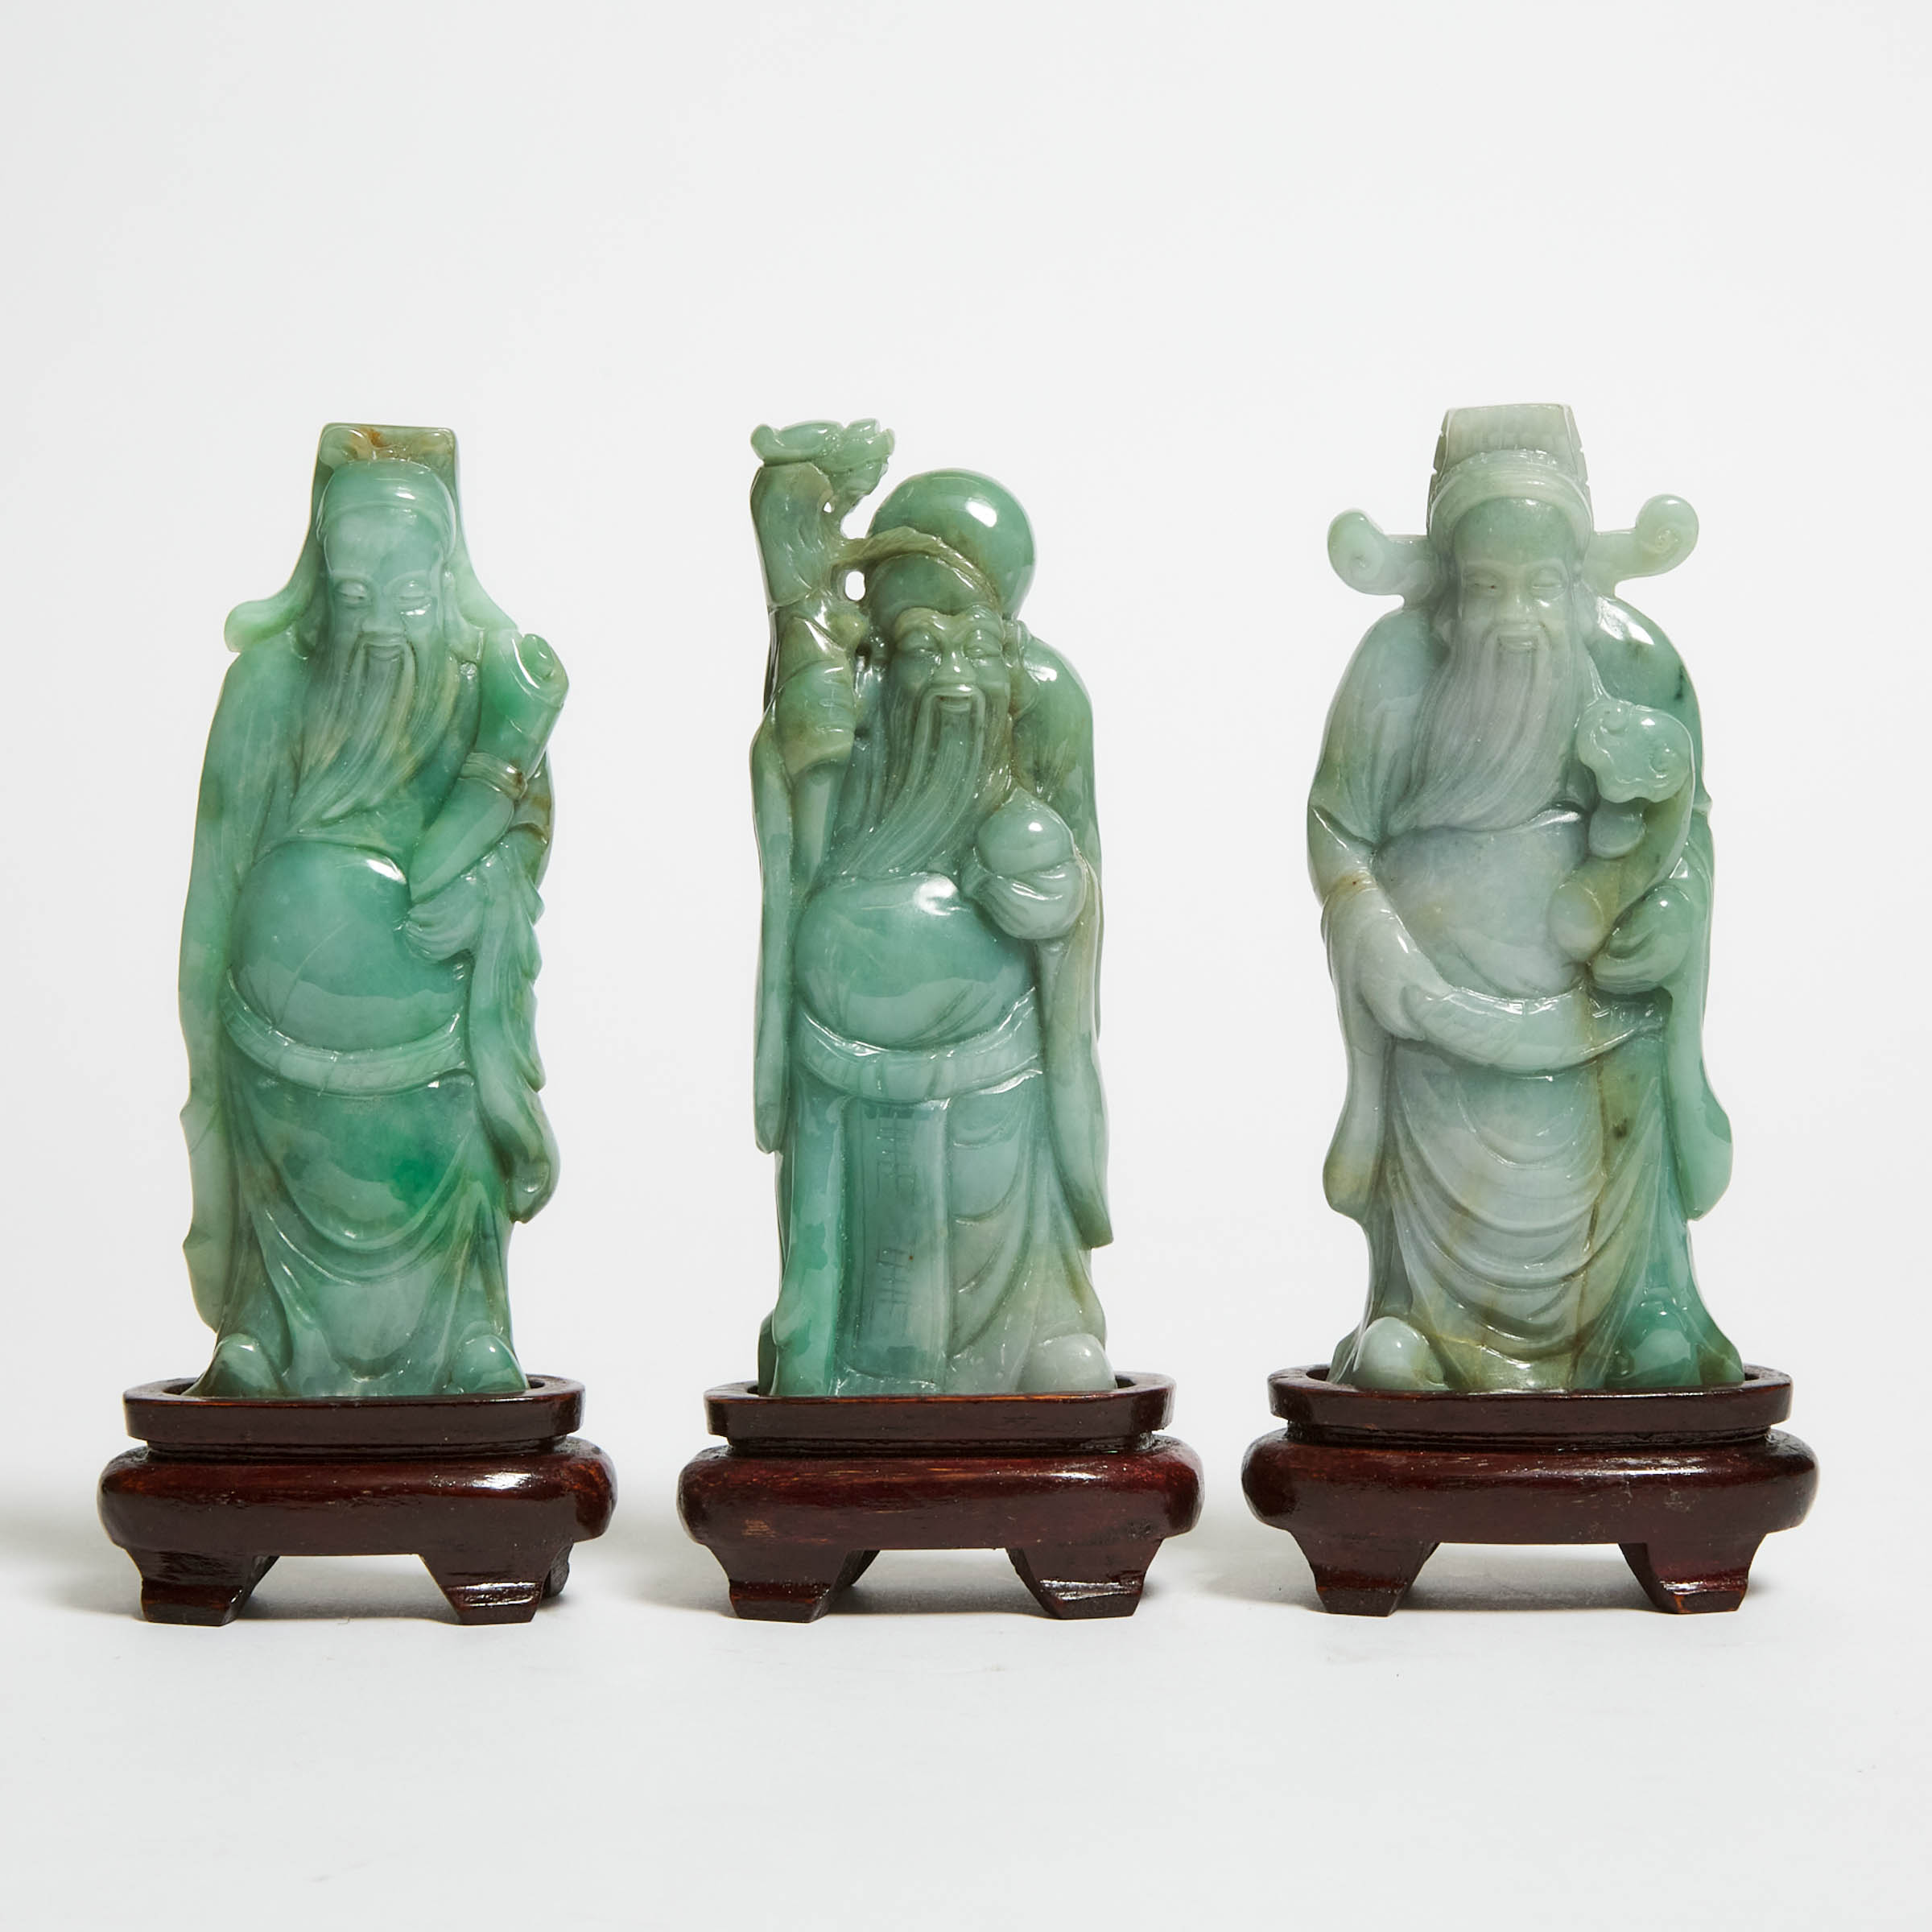 A Set of Three Jadeite Figures 2f2b6b